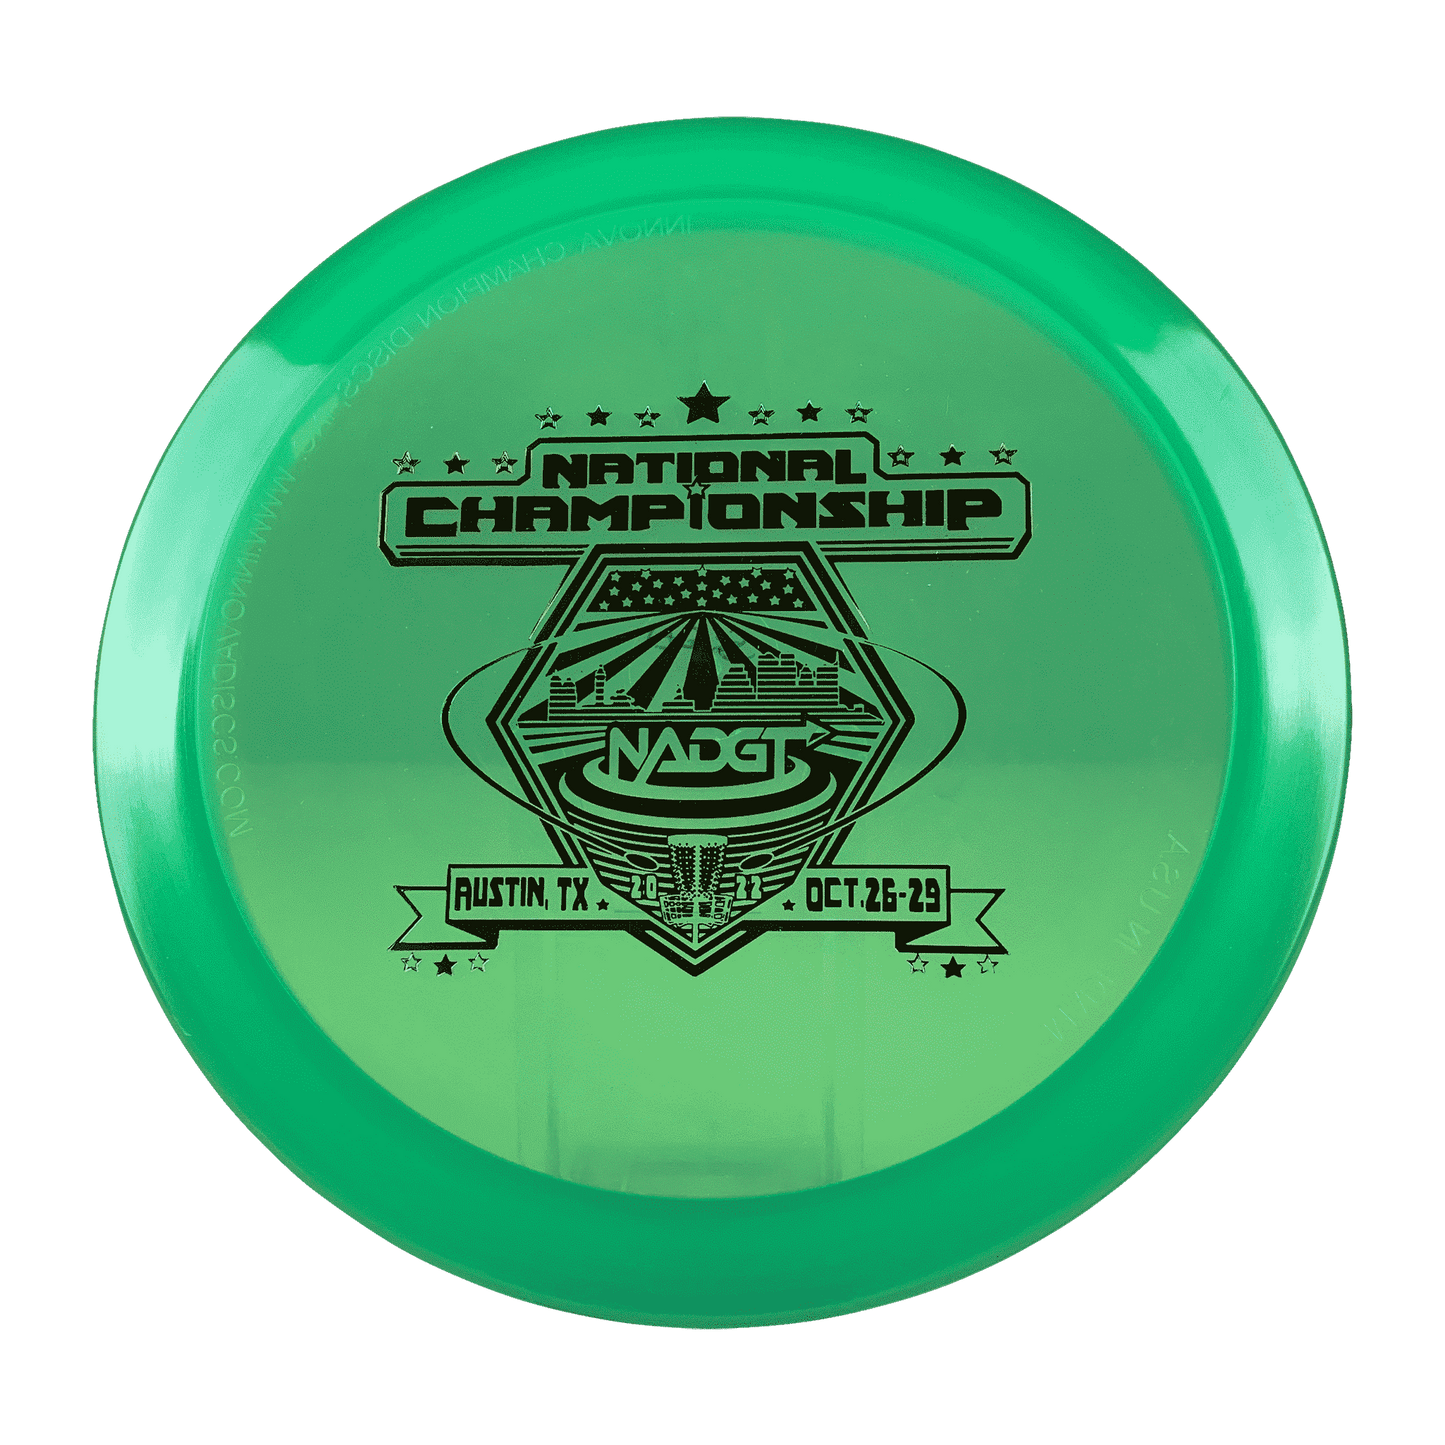 Champion Firebird - NADGT National Championship 2022 Disc Innova green 173 